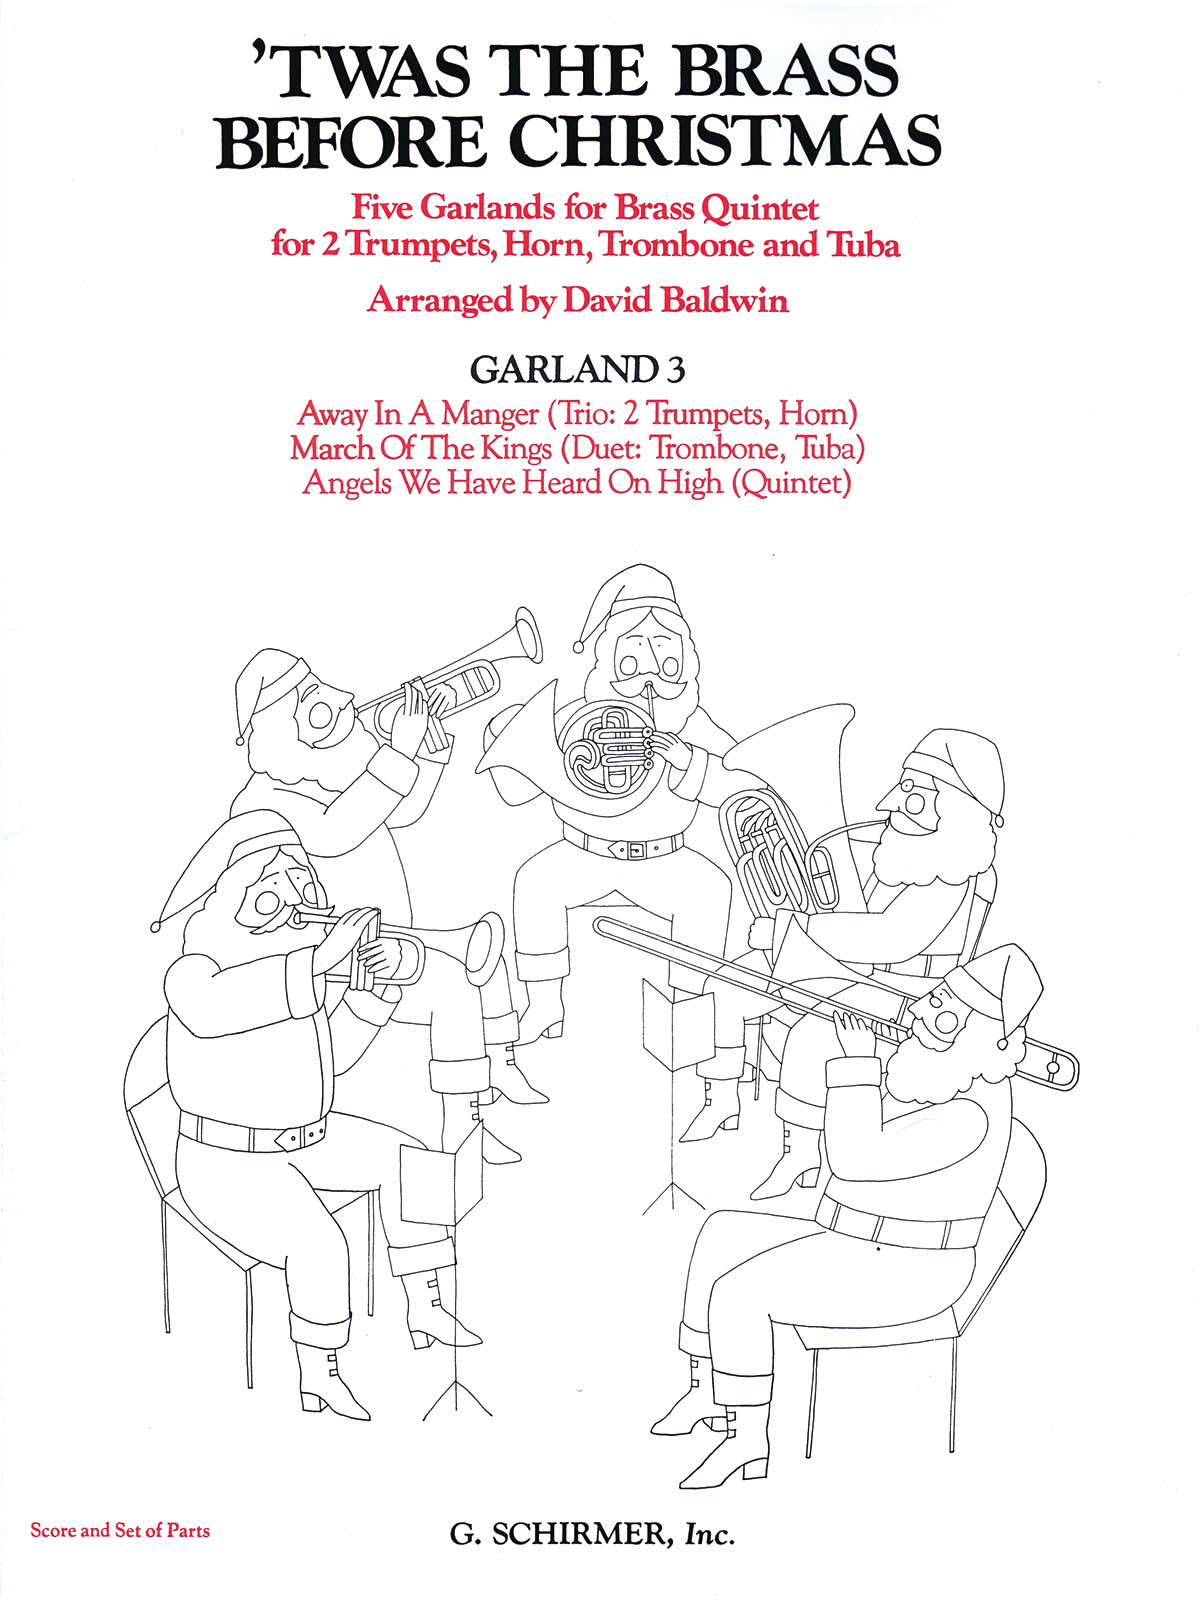 The Canadian Brass: Twas the Brass Before Christmas  3 Garlands: Brass Ensemble: